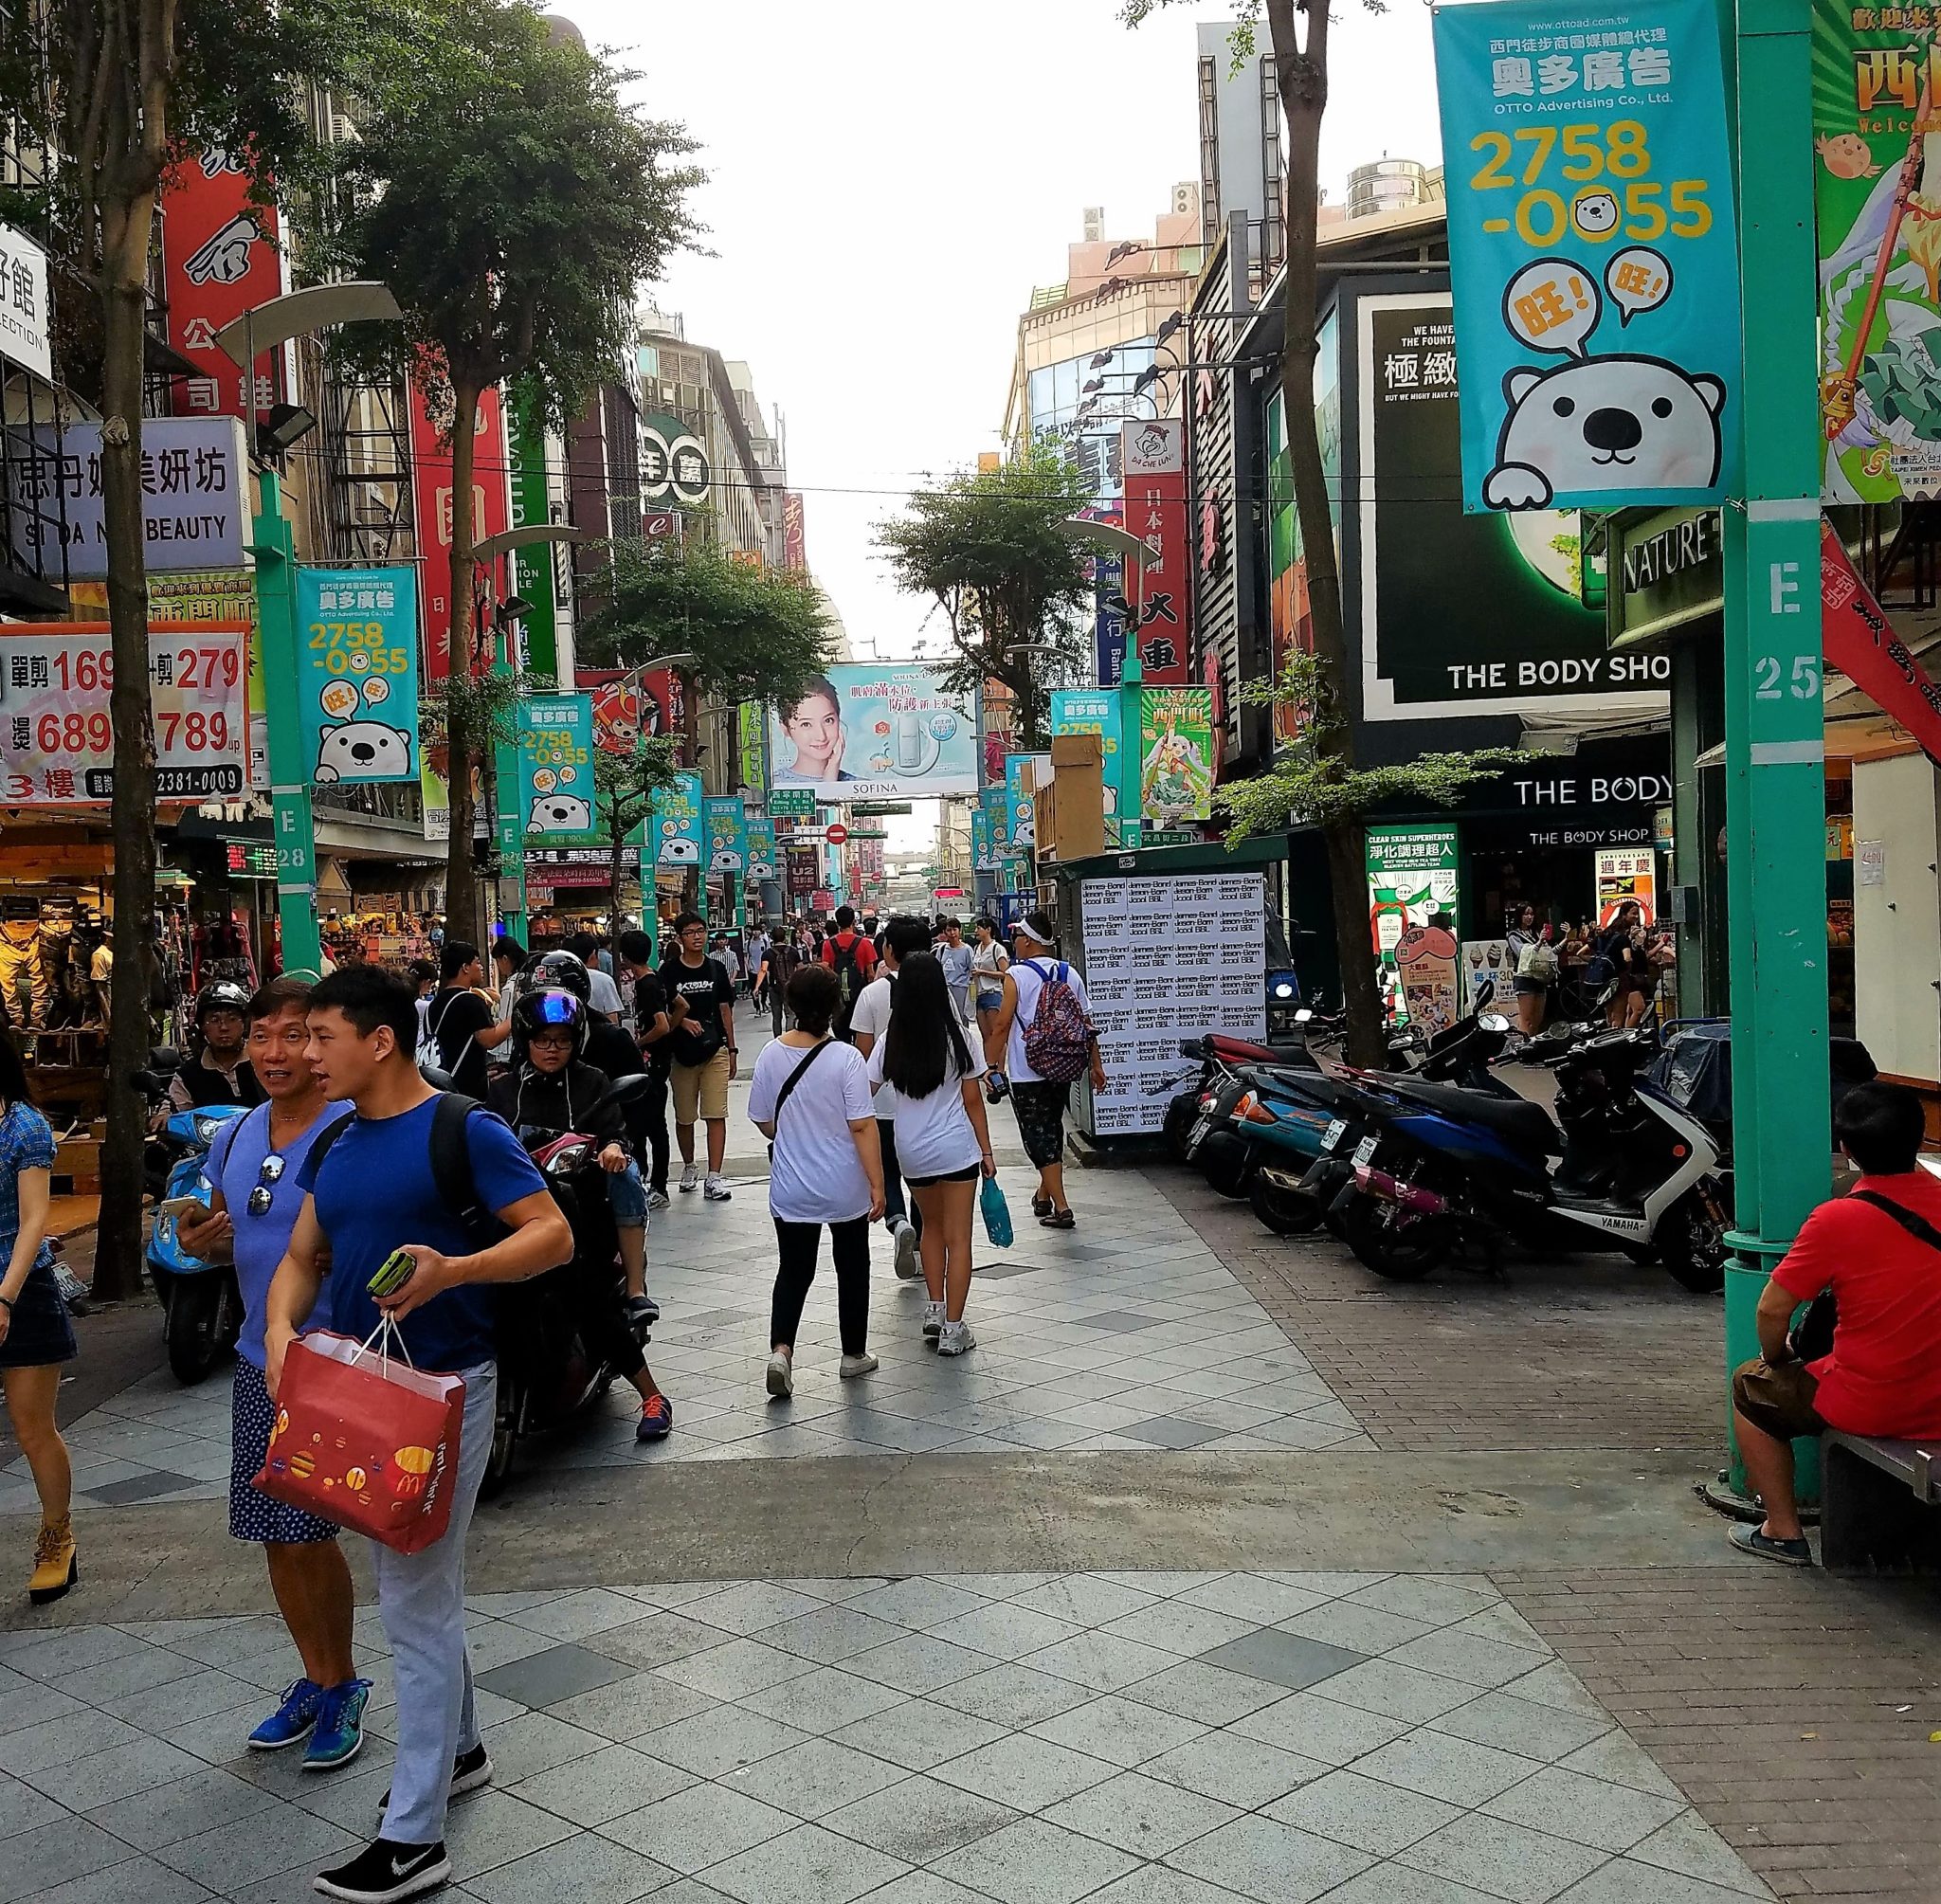 Ximen Station Shopping Mall located outside the Amba Hotel